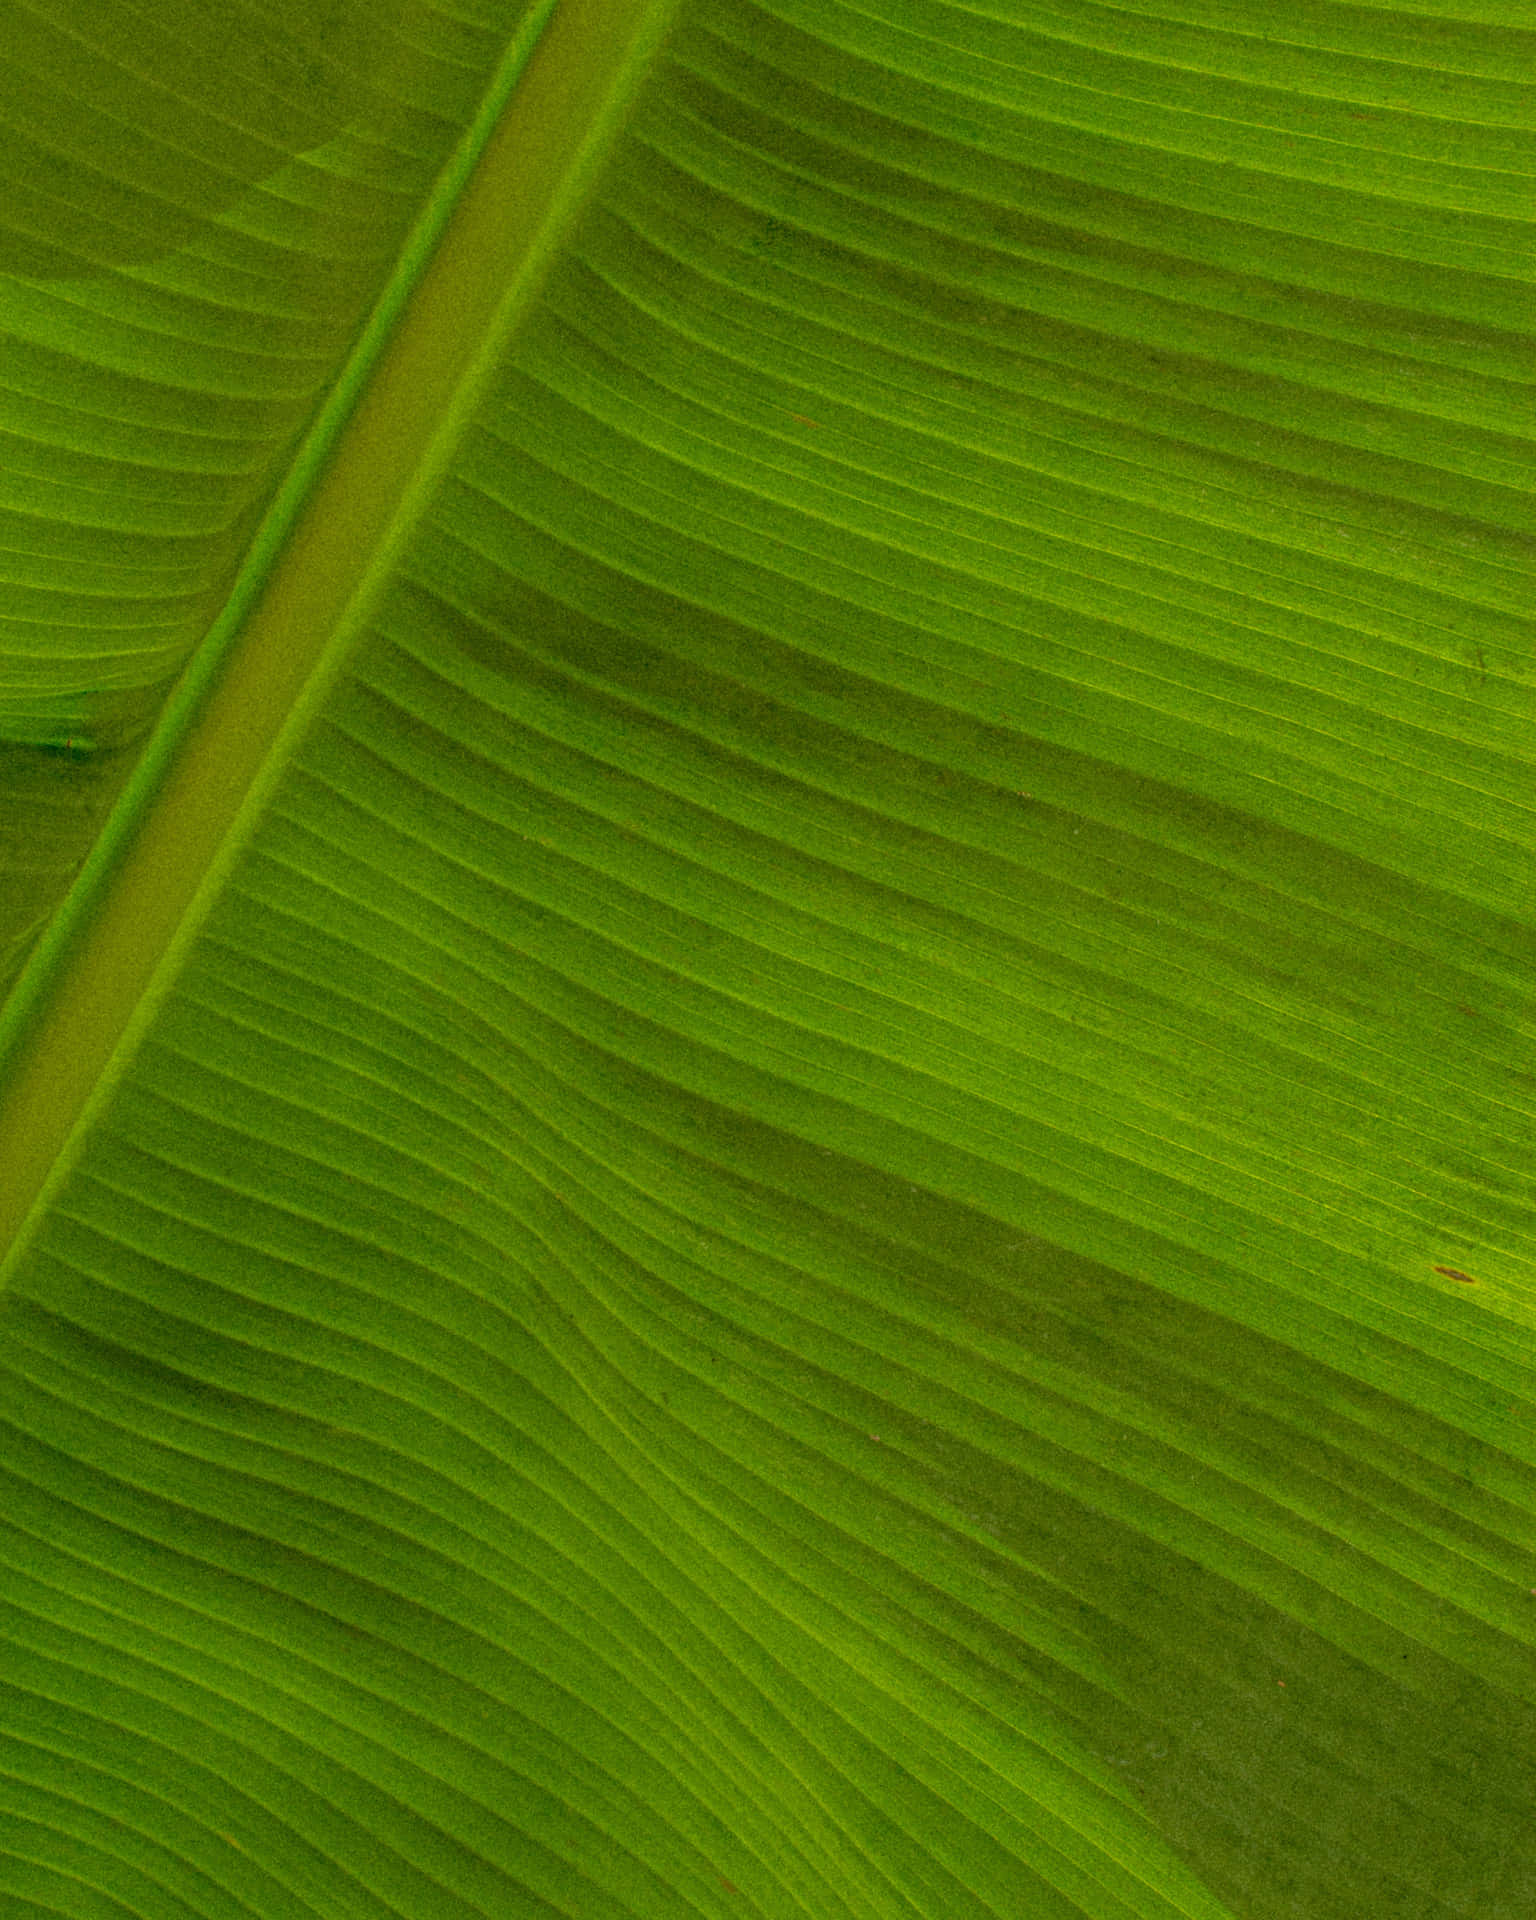 Bright Green Banana Leaf on White Background